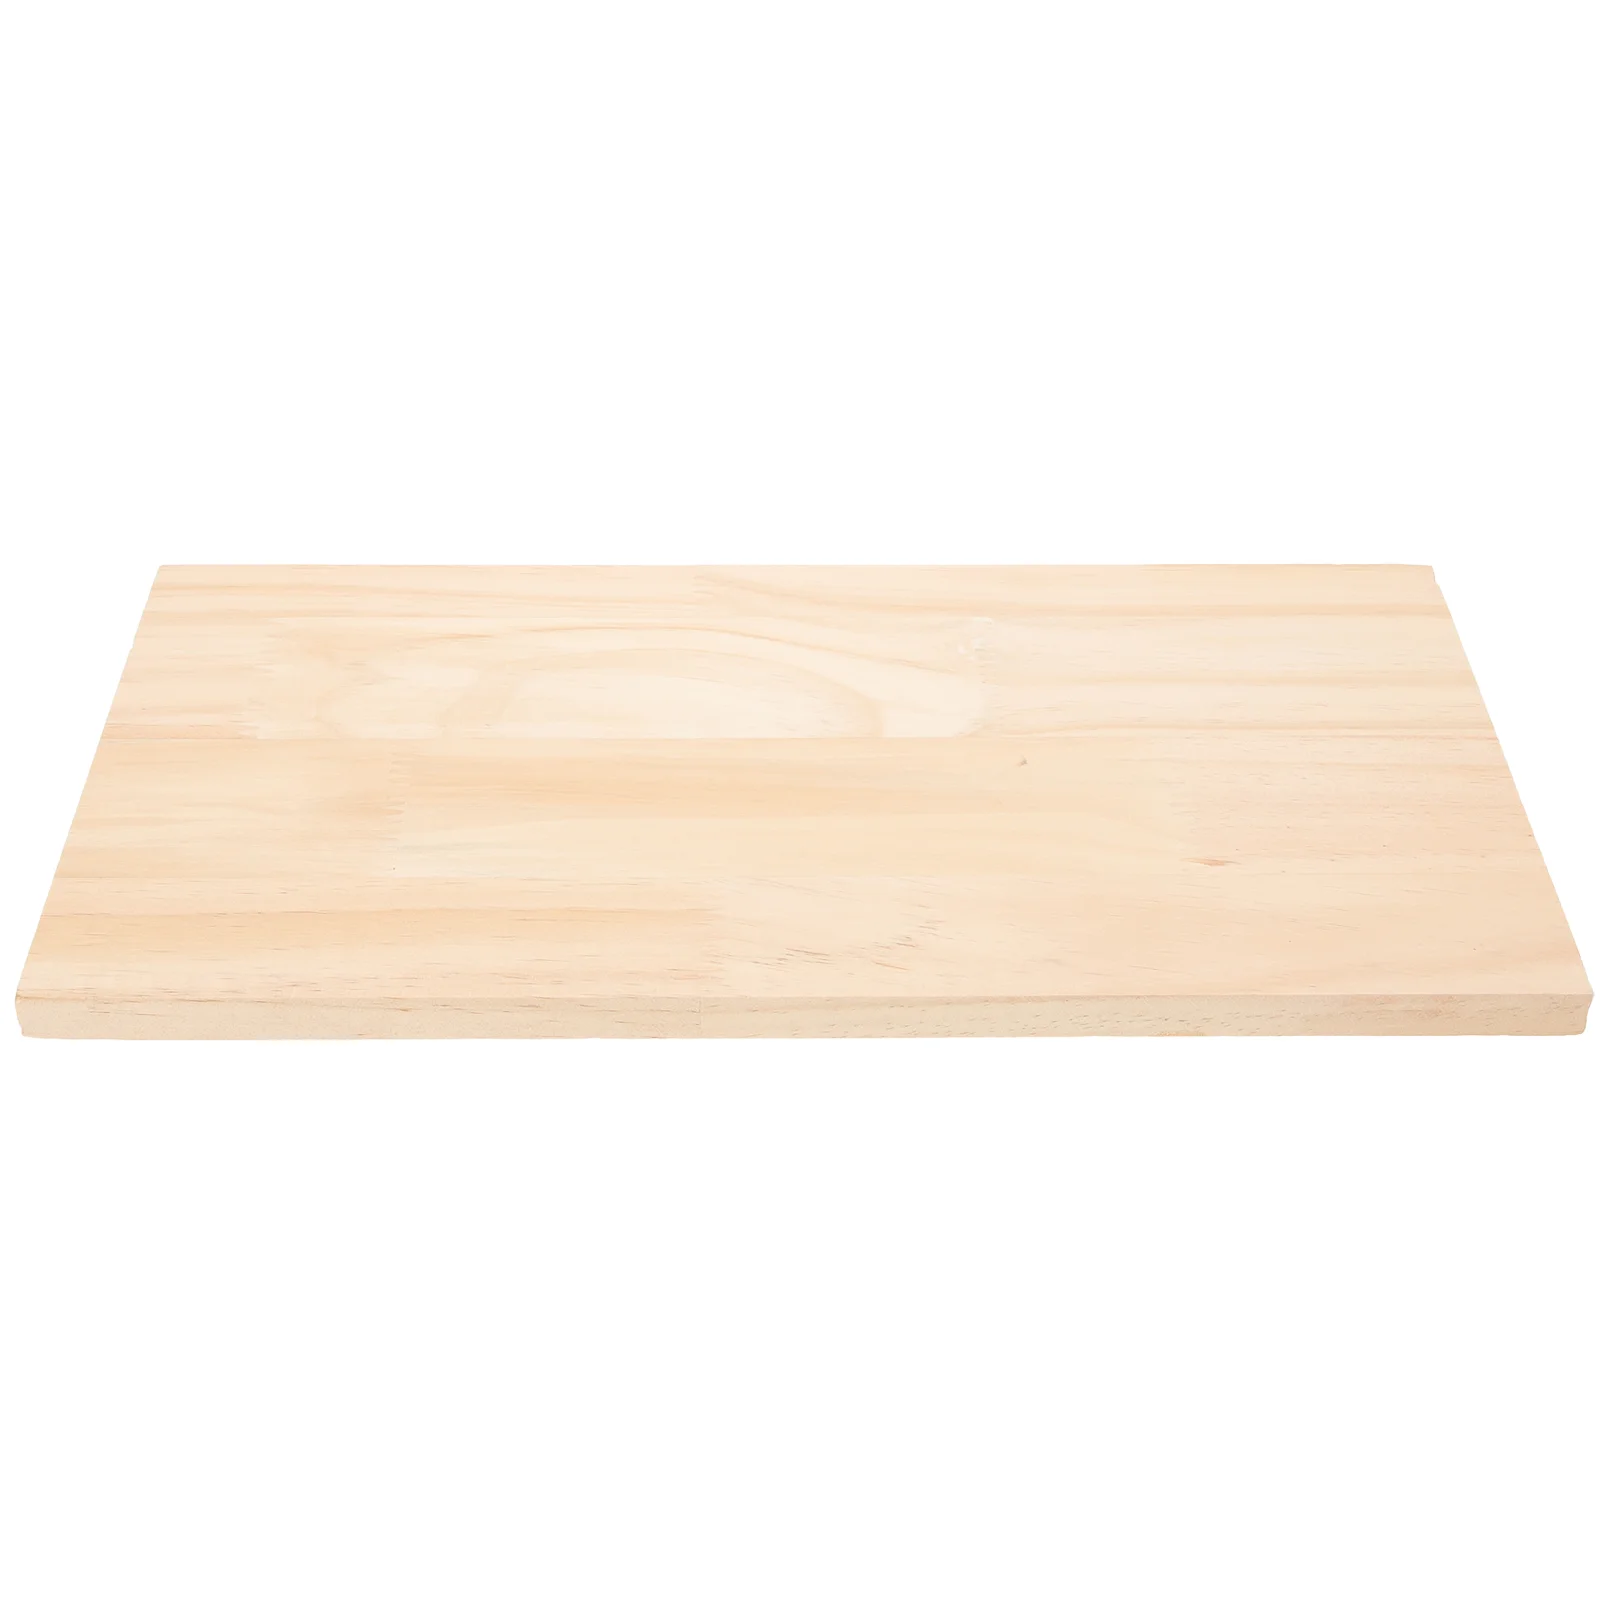 

Wood Planks DIY Supplies Square Crafts Wooden Squares Furniture Plain Slice Boards